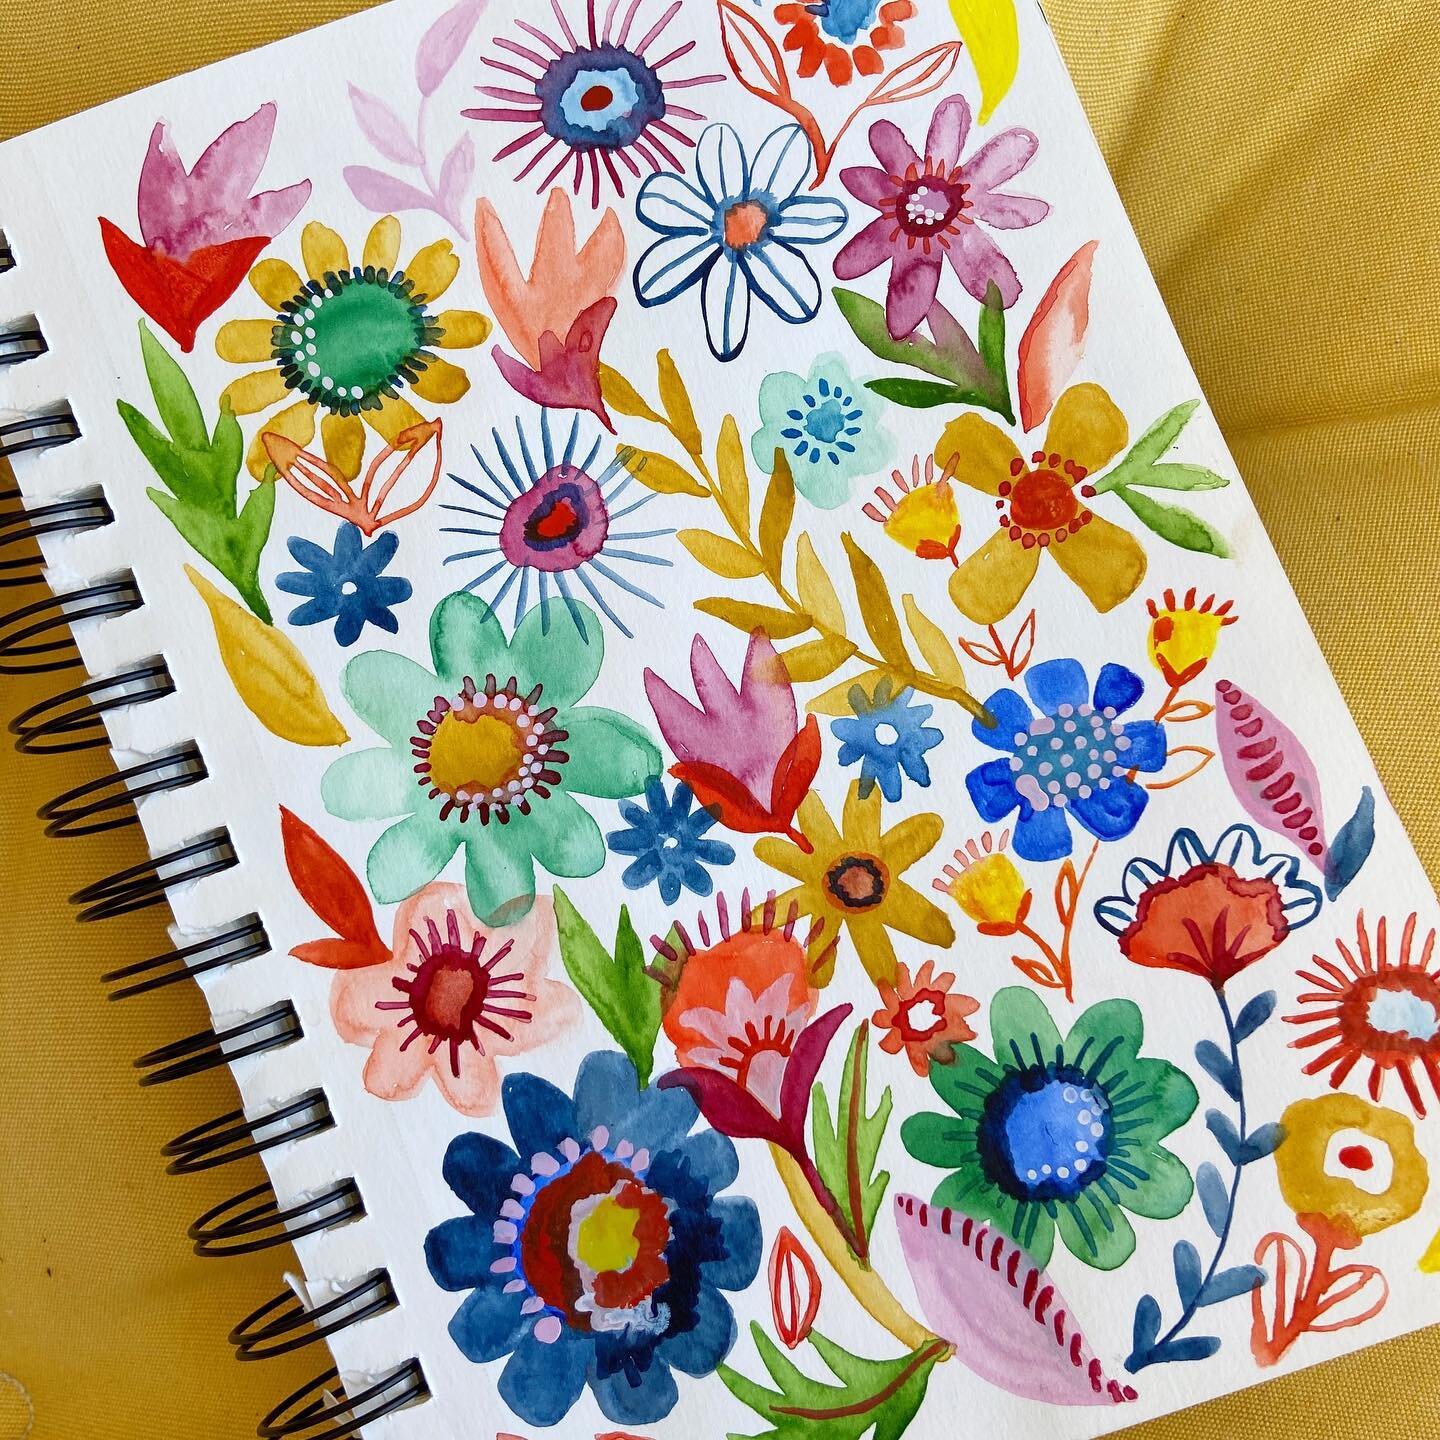 Some people feel like summertime. 
.
.
.
.
.
.
.
.
#2020 #dailydoodles #arttherapy #watercolorflorals #dscolor #dsfloral #sketchbookart